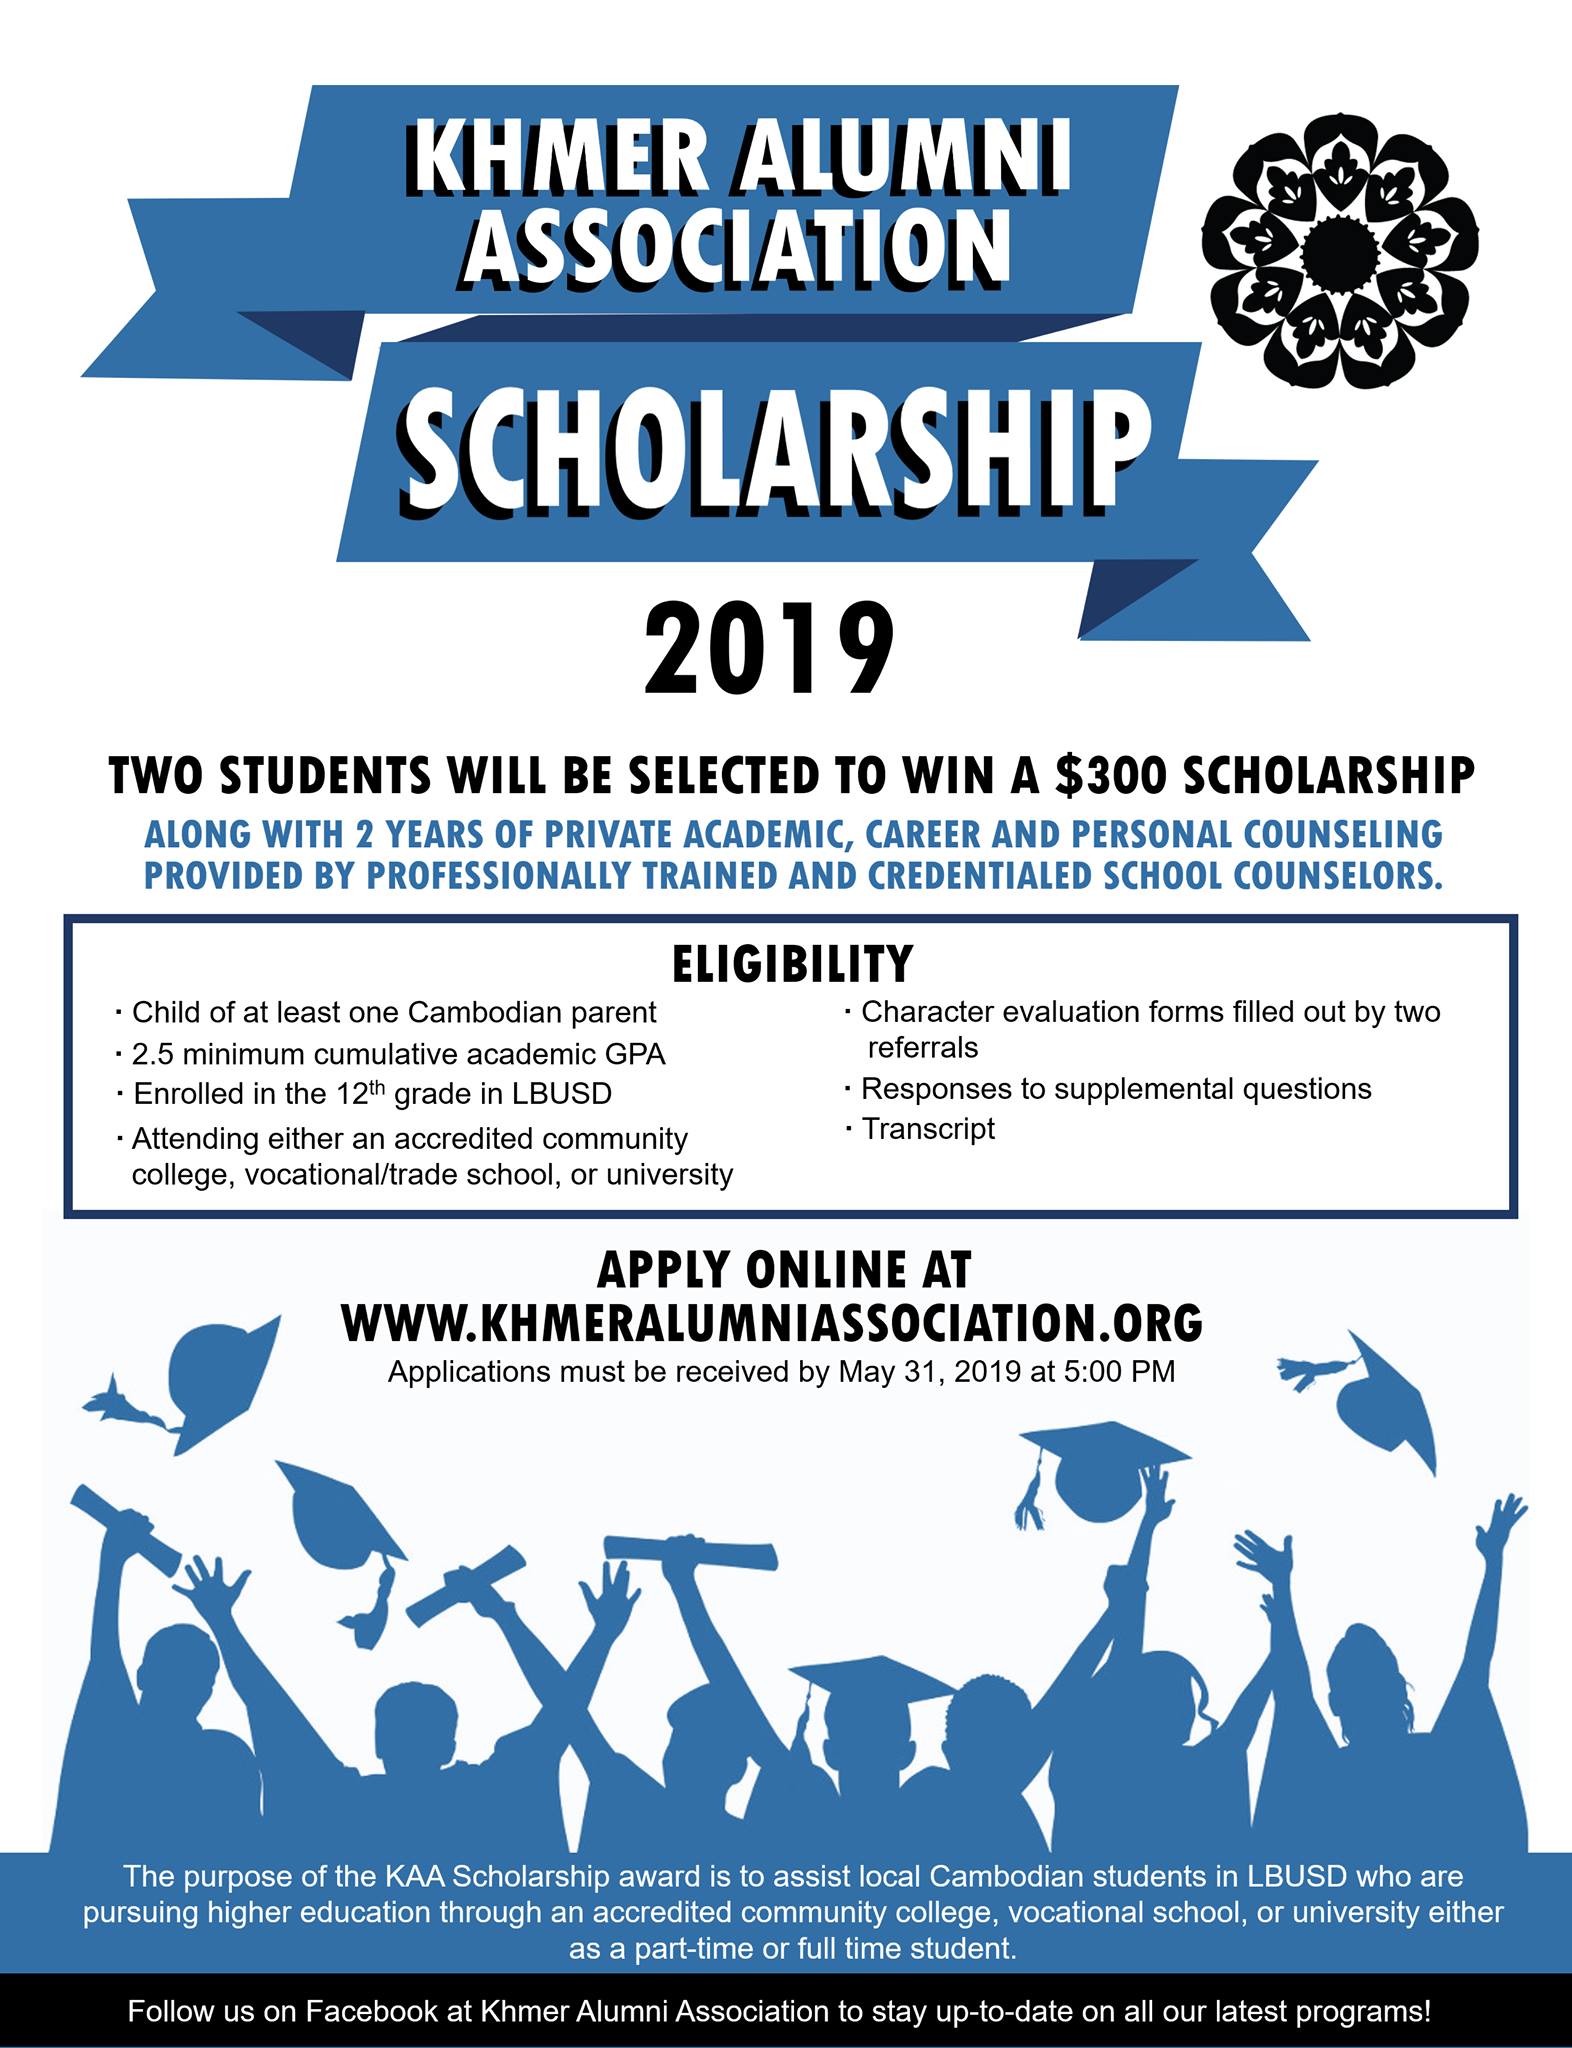 Khmer Alumni Association is proud to announce that the 2019 Scholarship Program